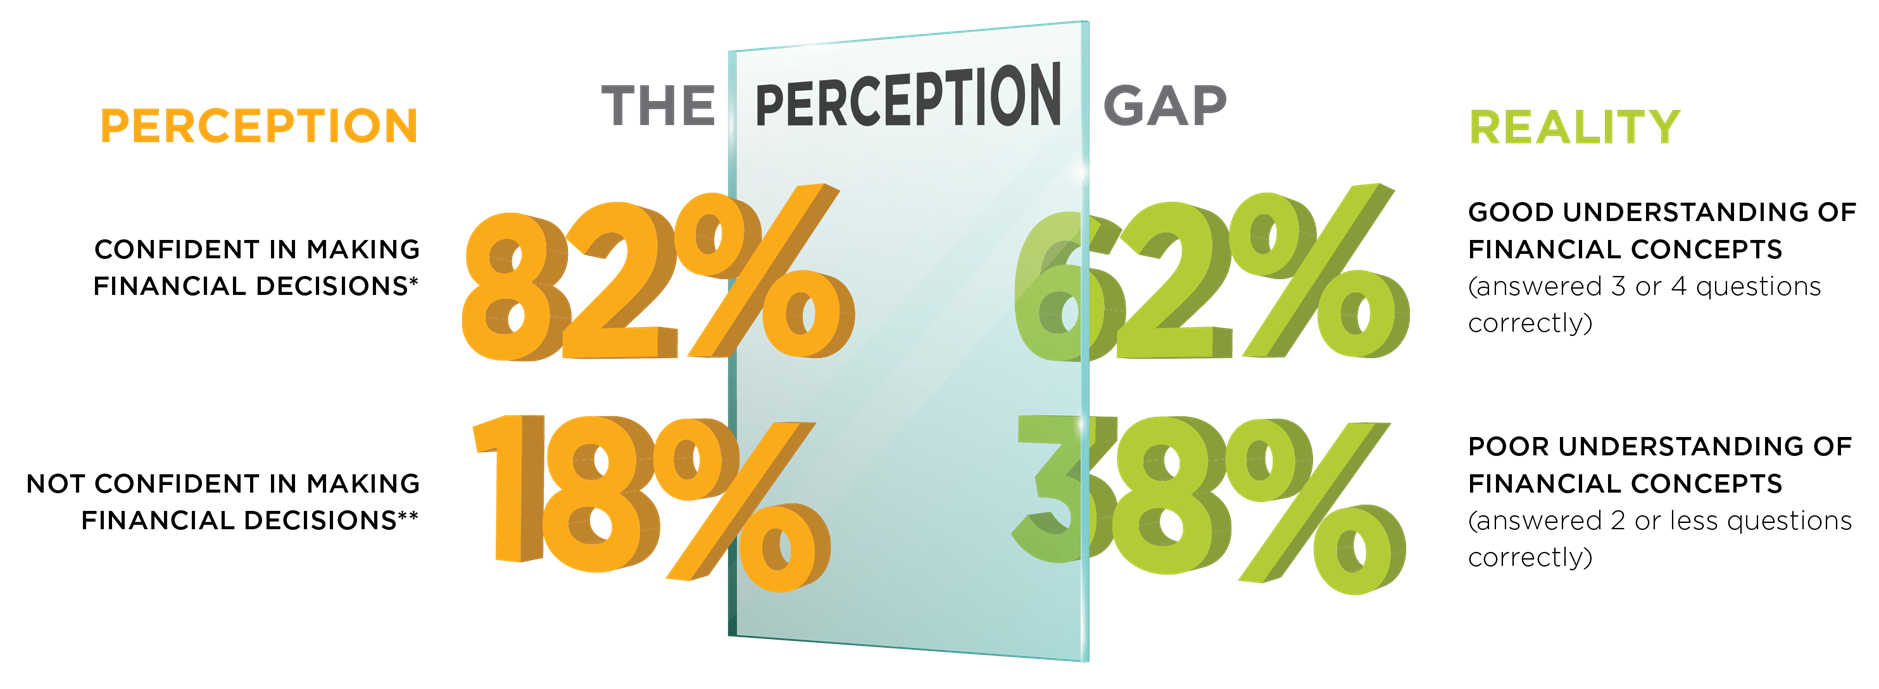 perception gap